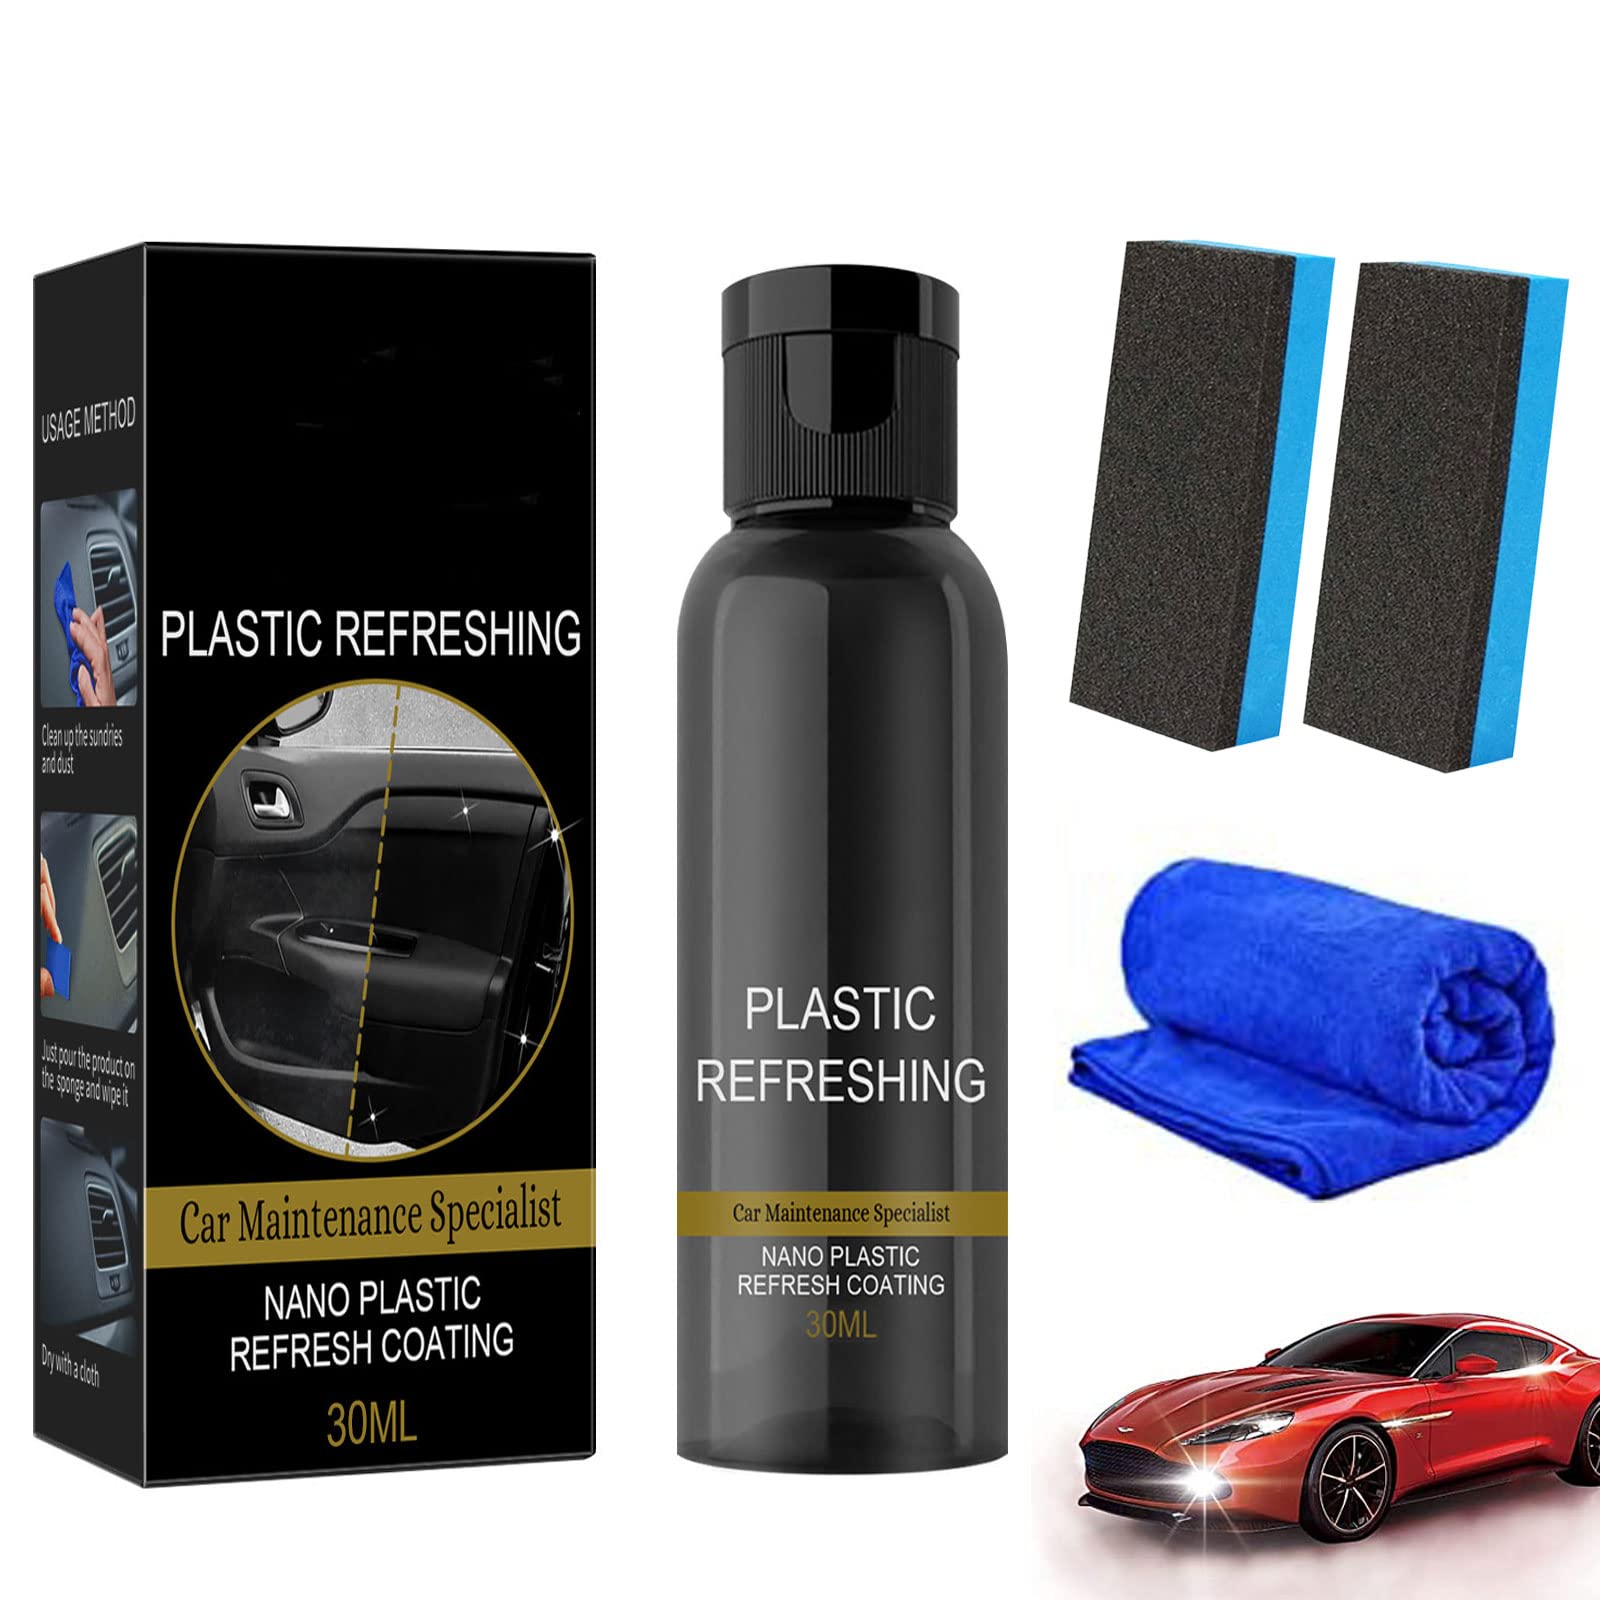 HIDRUO Ultishine Plastic Revitalizing Coating Agent Set, Plastic Refreshing Car Black, Powerful Stain Removal Kit for Car, Nano Plastic Refreshing Coating for Car Quick Restorer (30ML, 1PCS) von HIDRUO